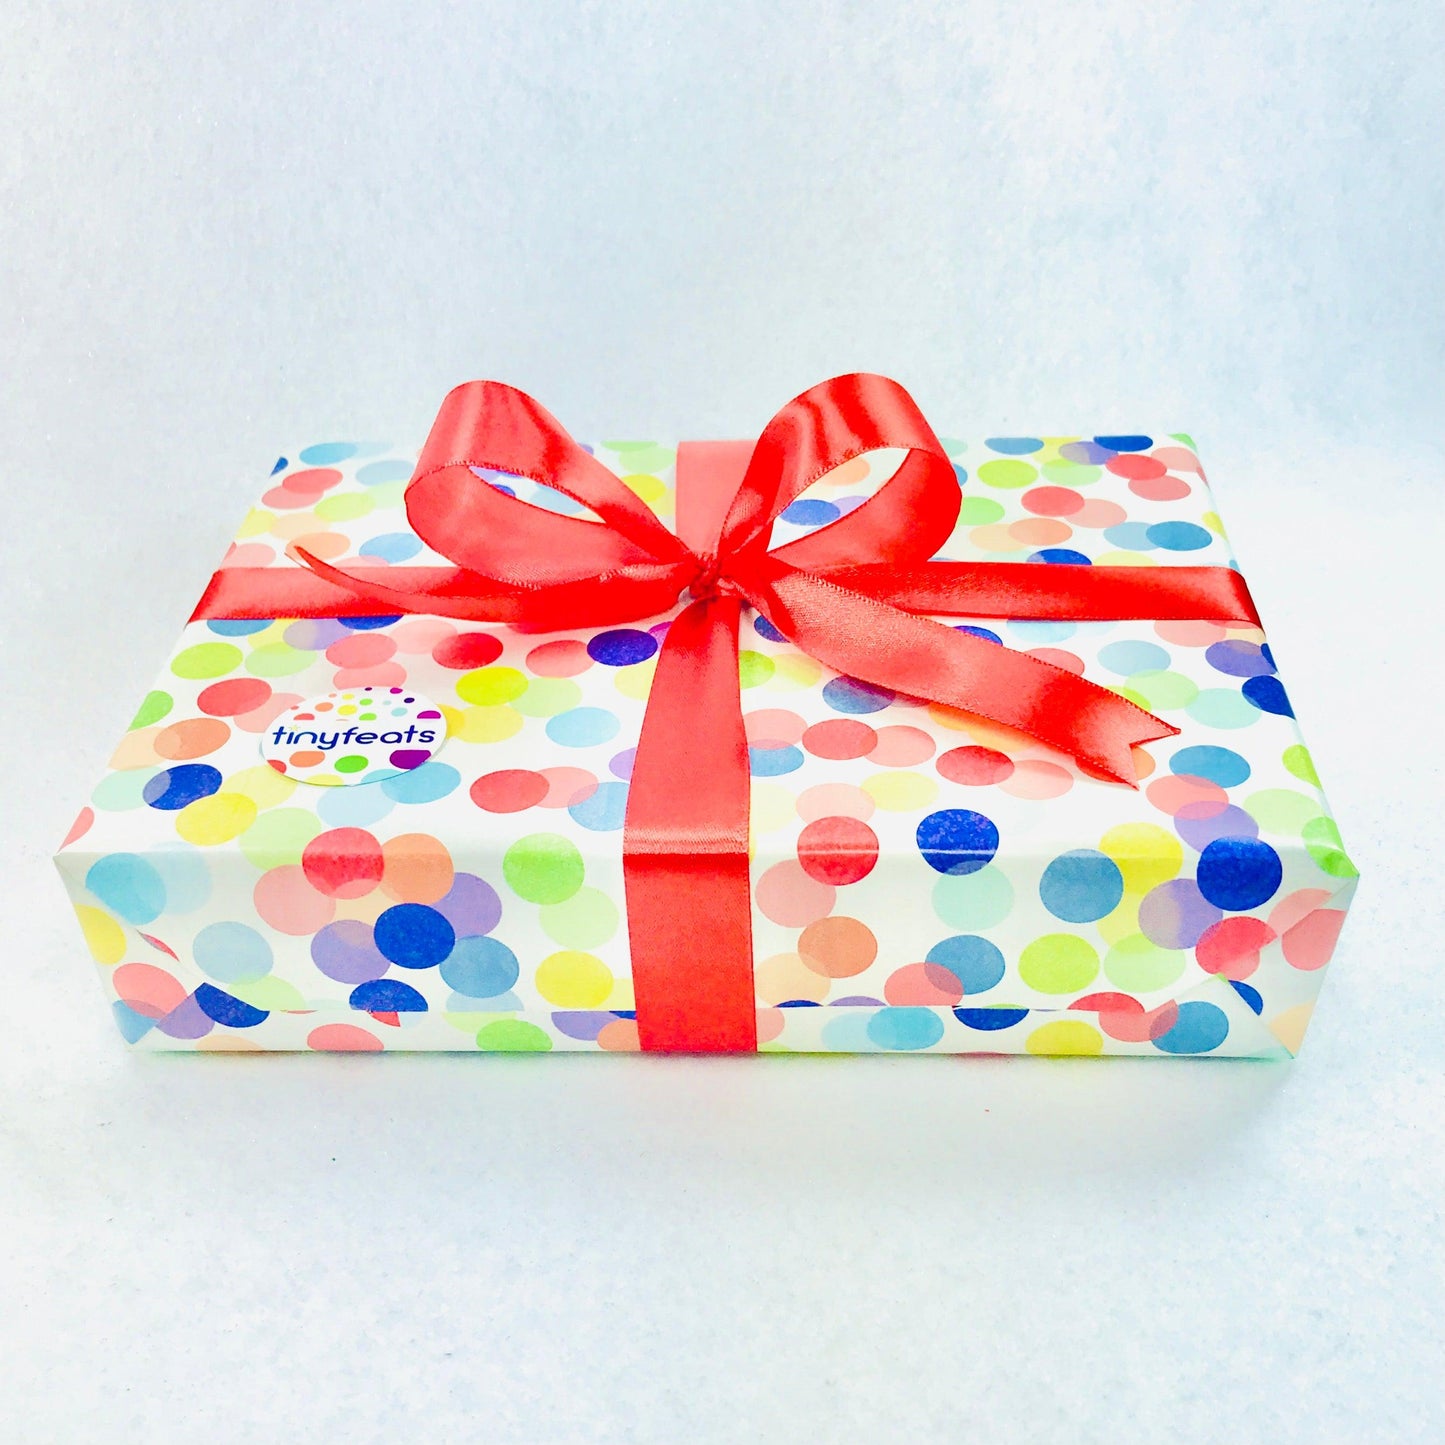 Gift Wrap - tinyfeats